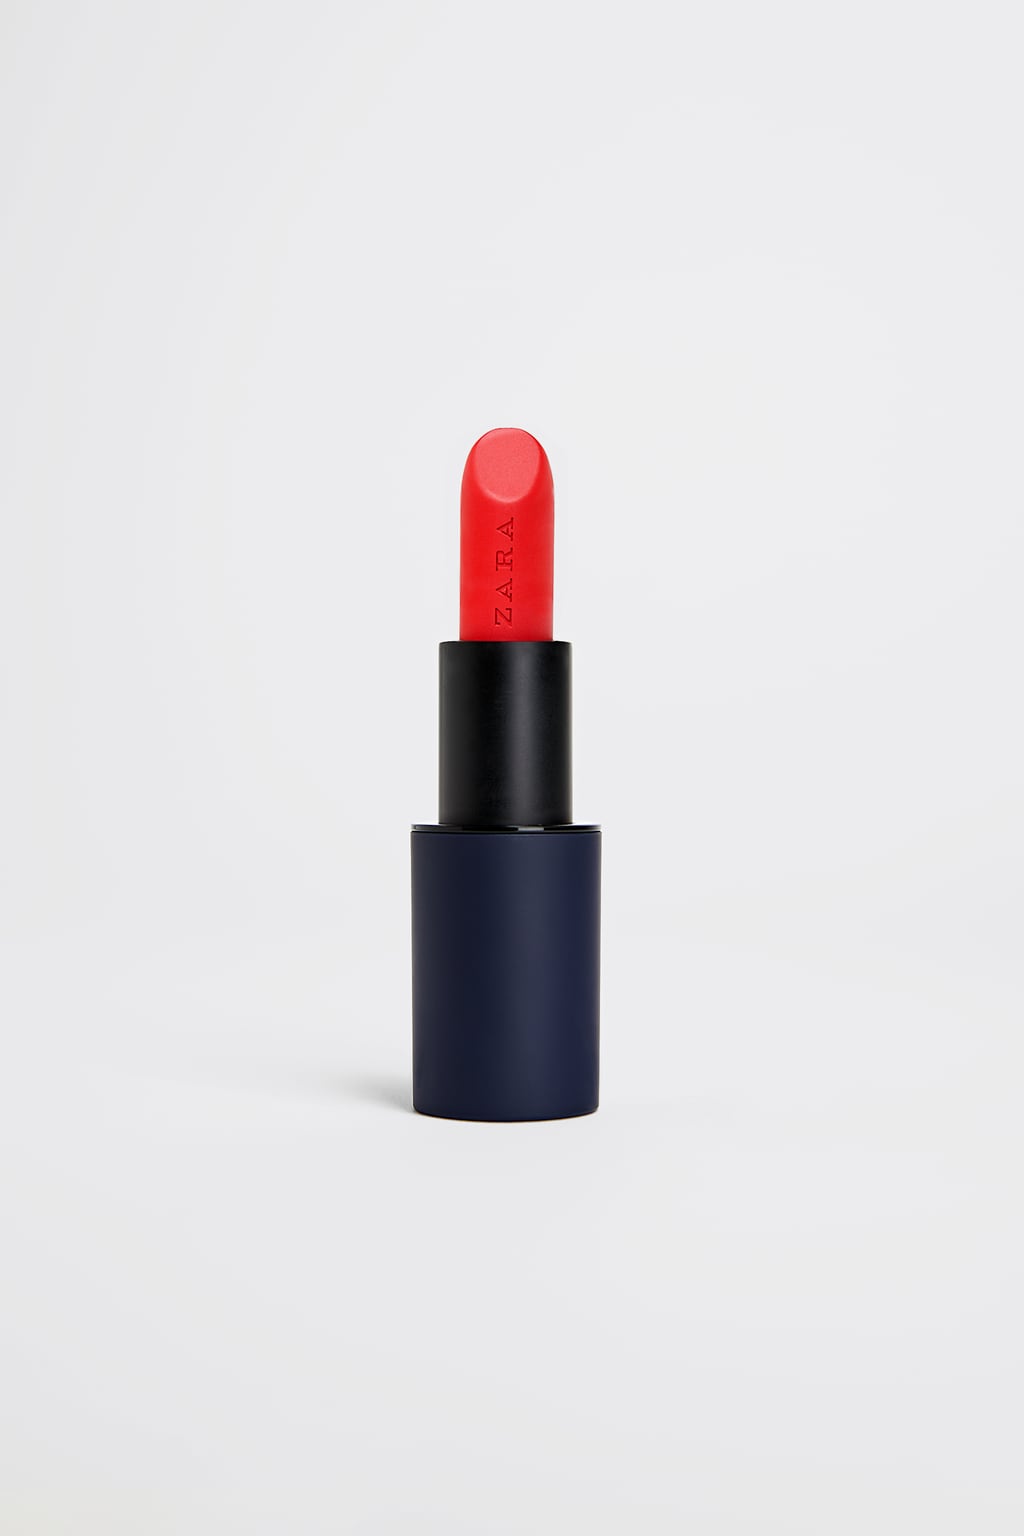 Zara Ultimatte Lipstick